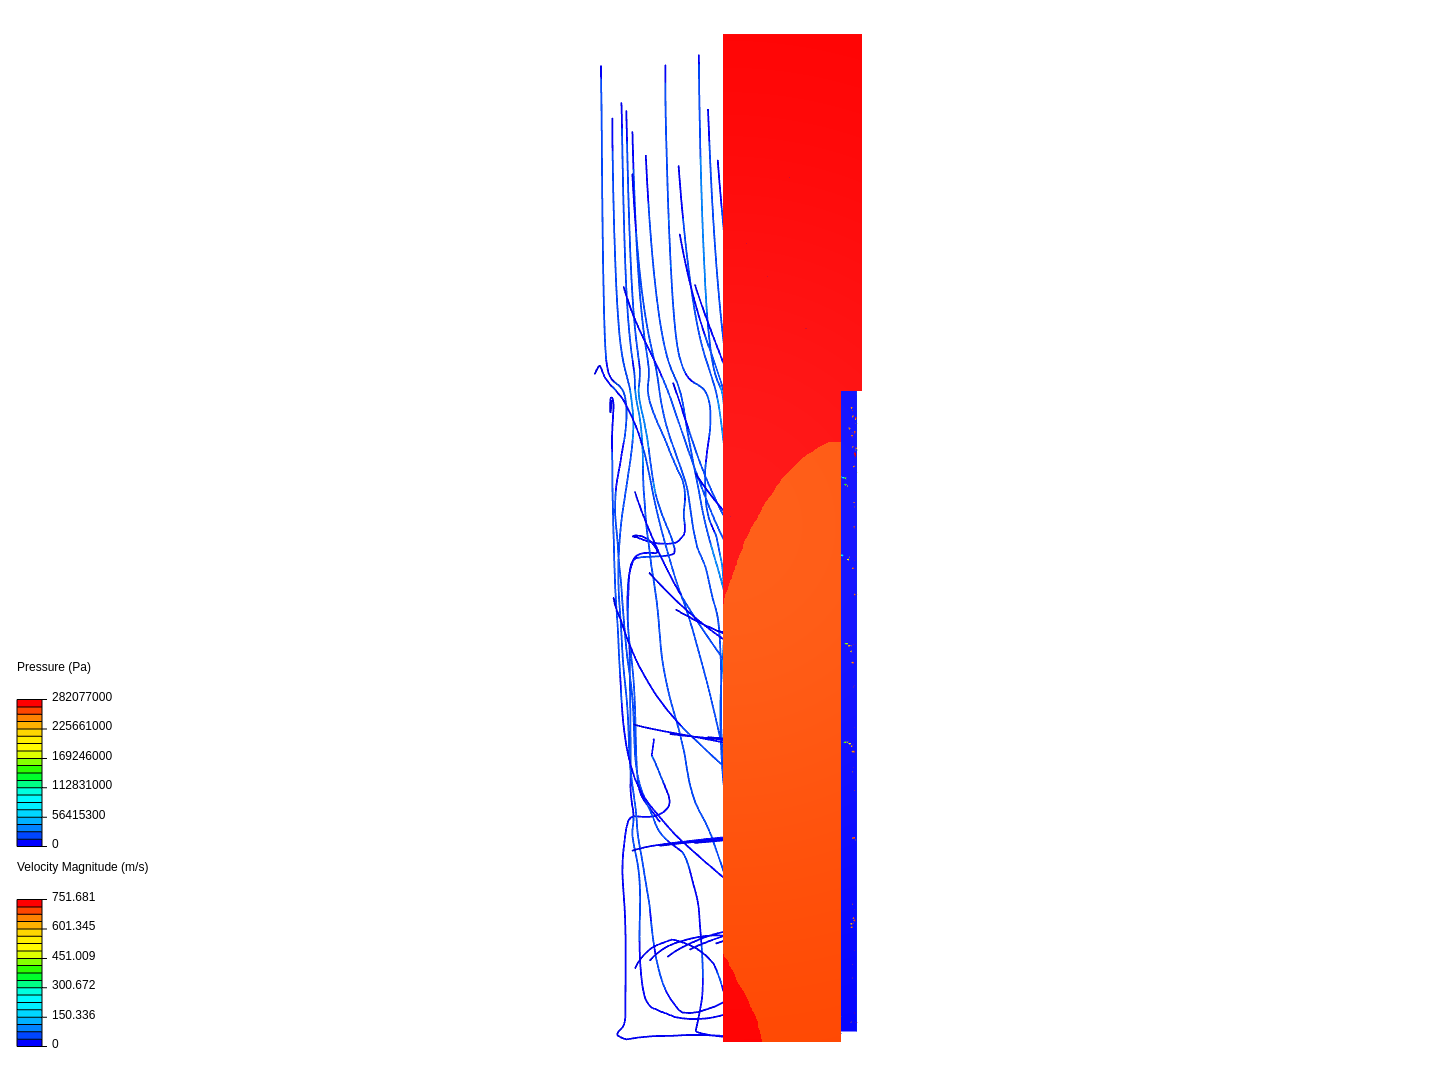 simulation image